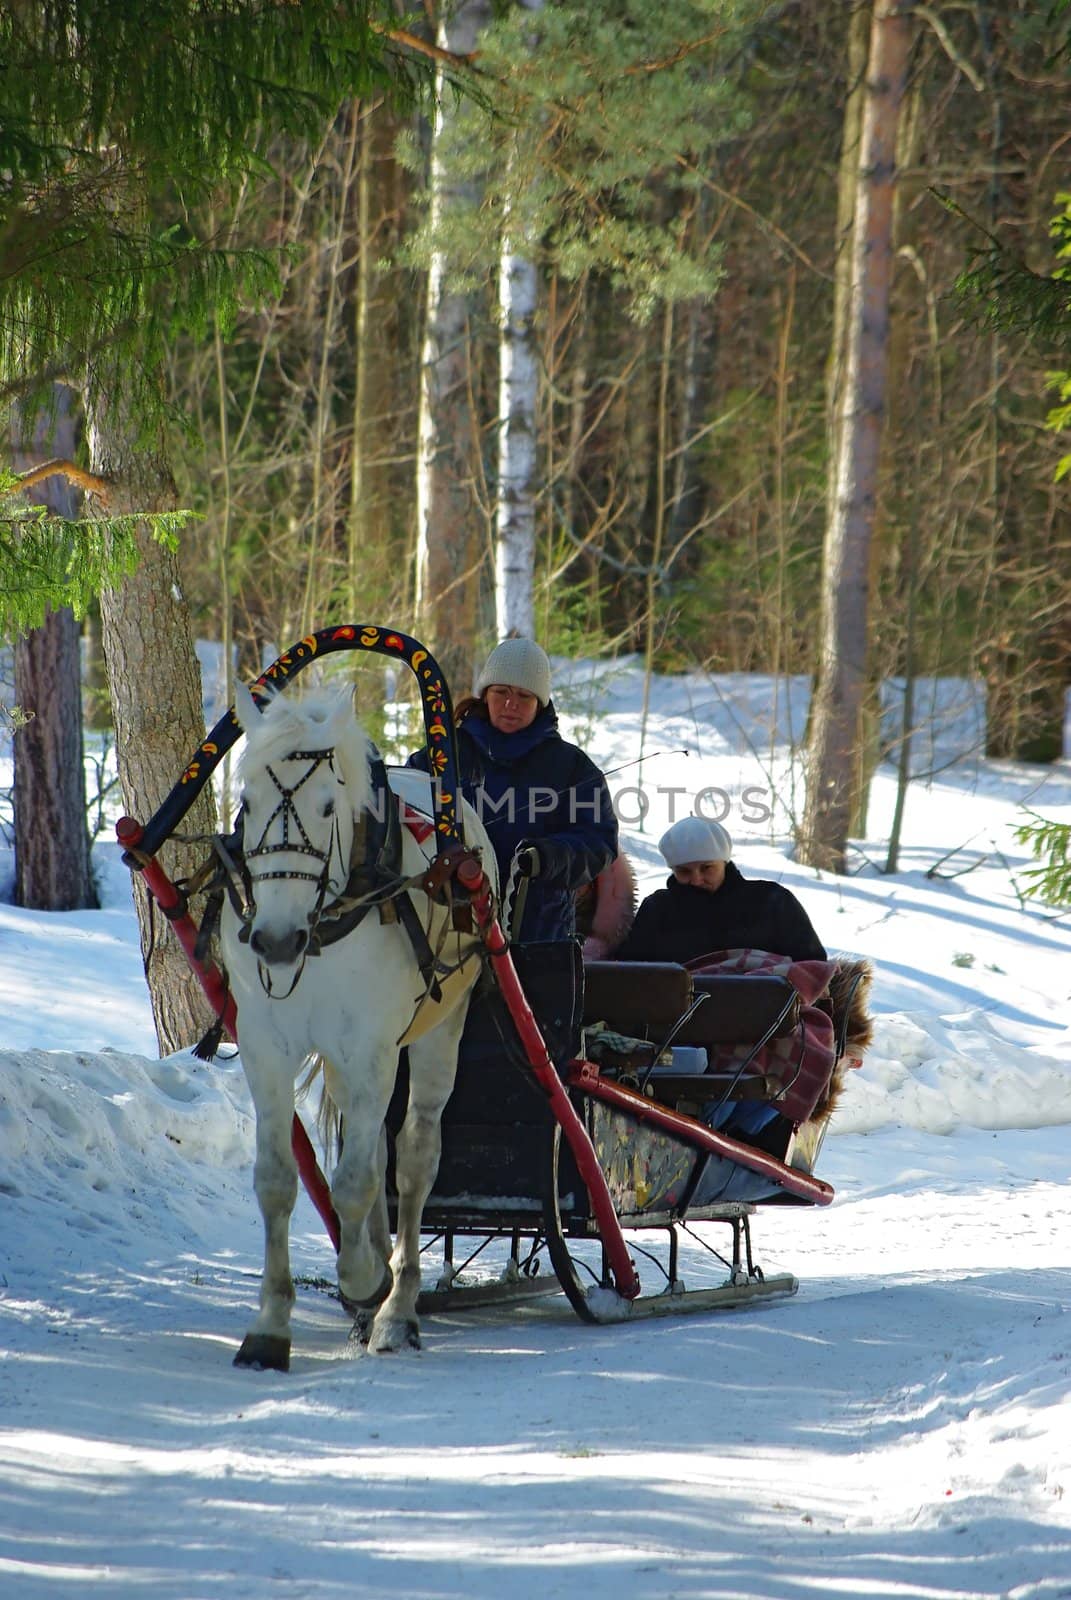 Horse sledge by Vitamin